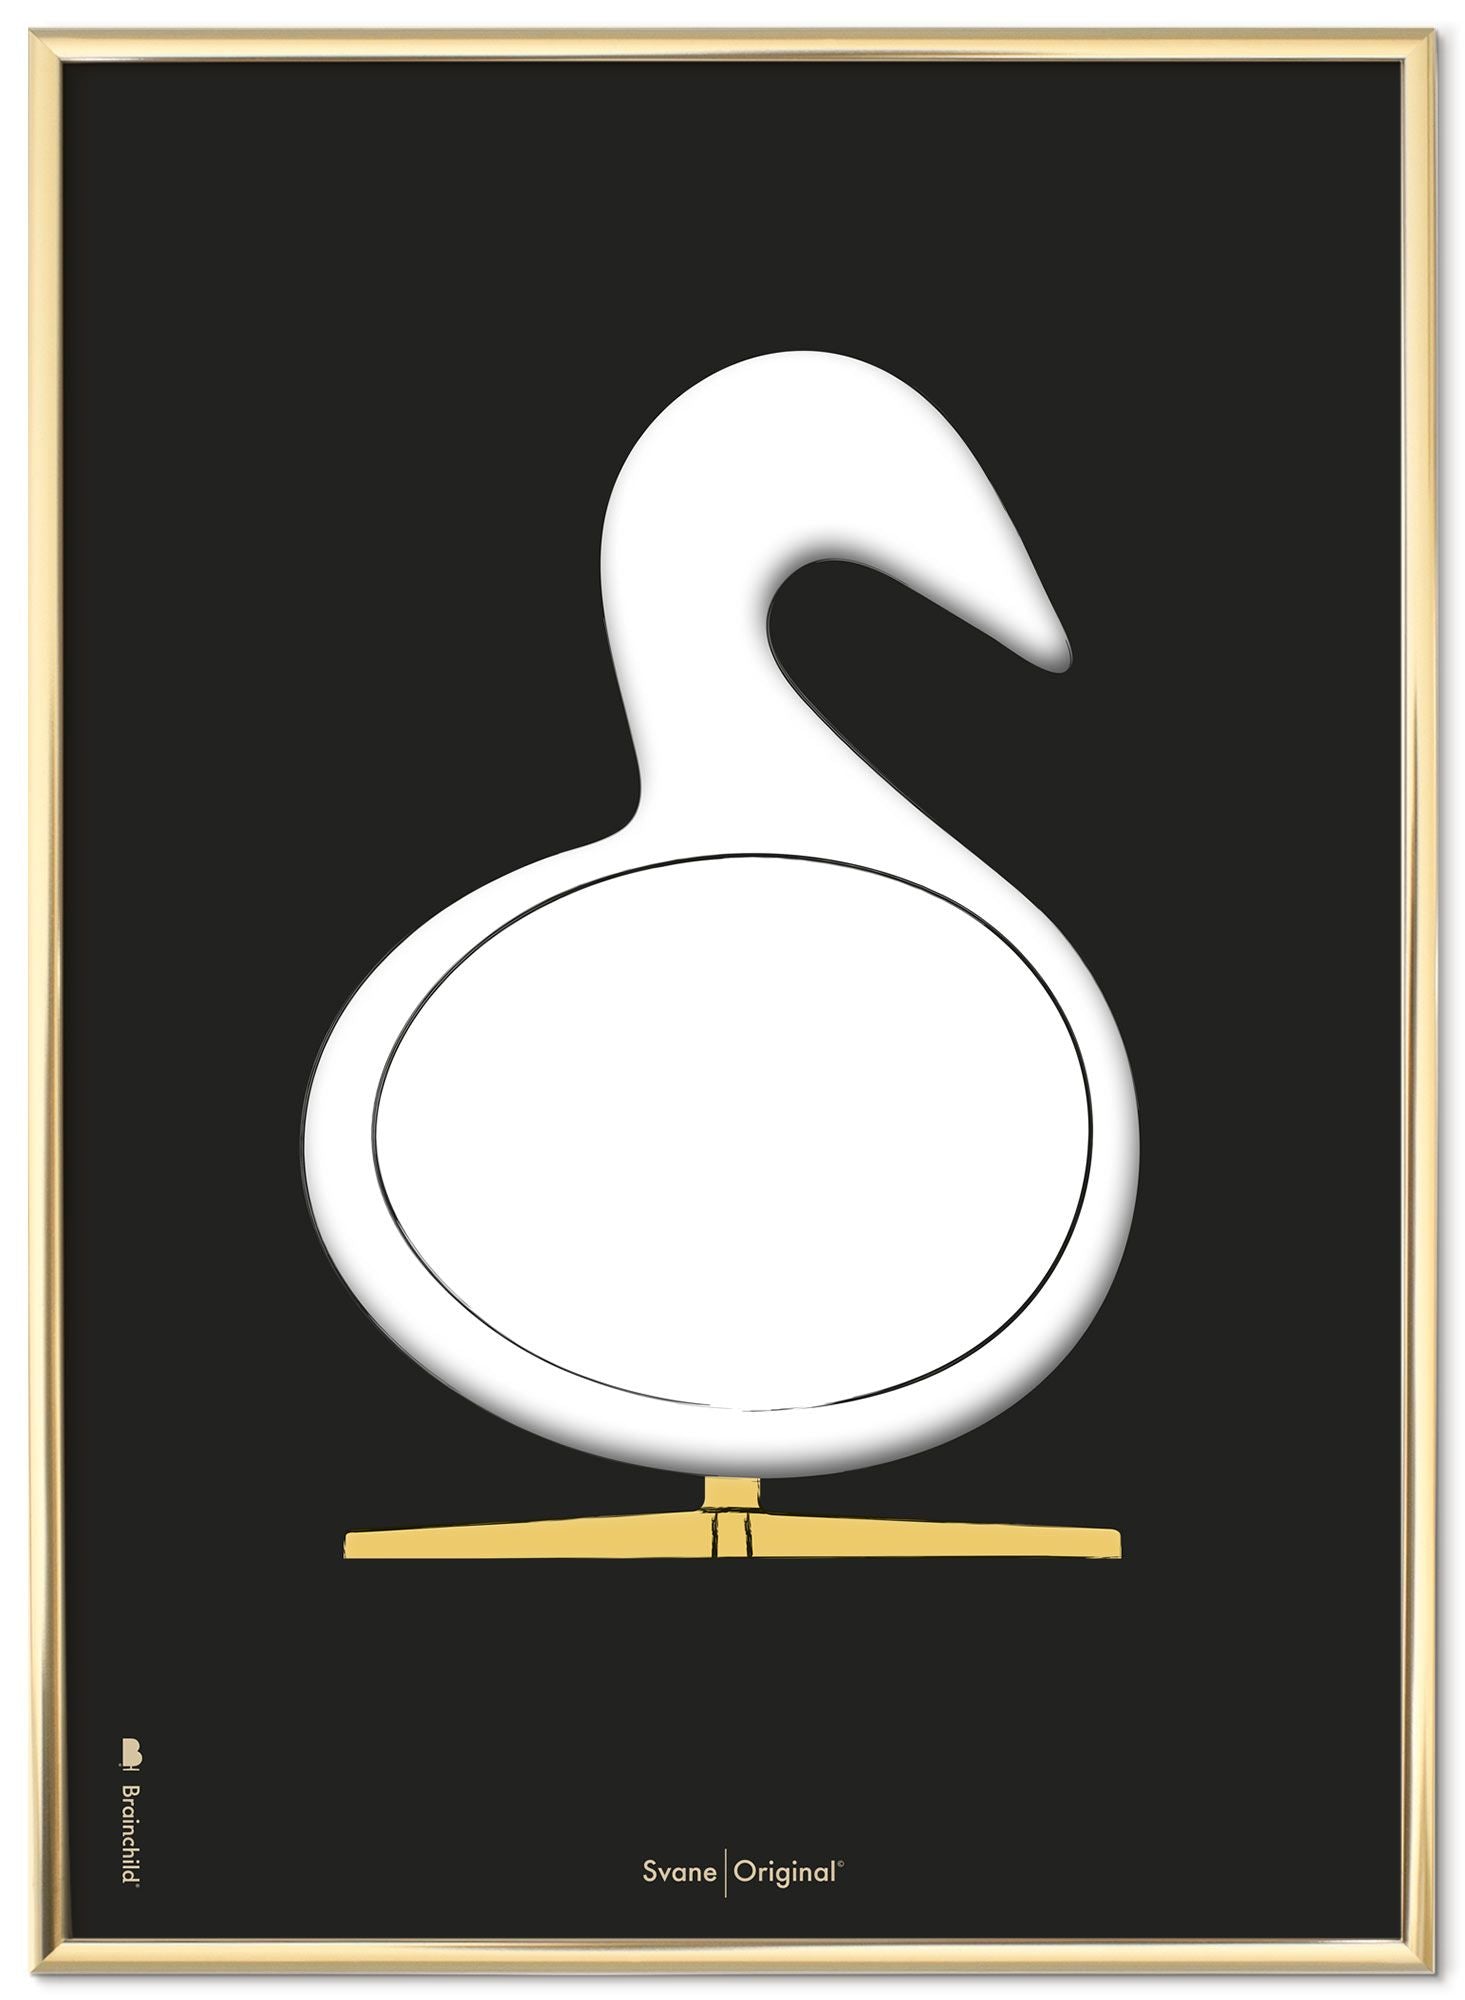 Brainchild Swan Design Sketch Poster Frame Made Of Brass Colored Metal A5, Black Background